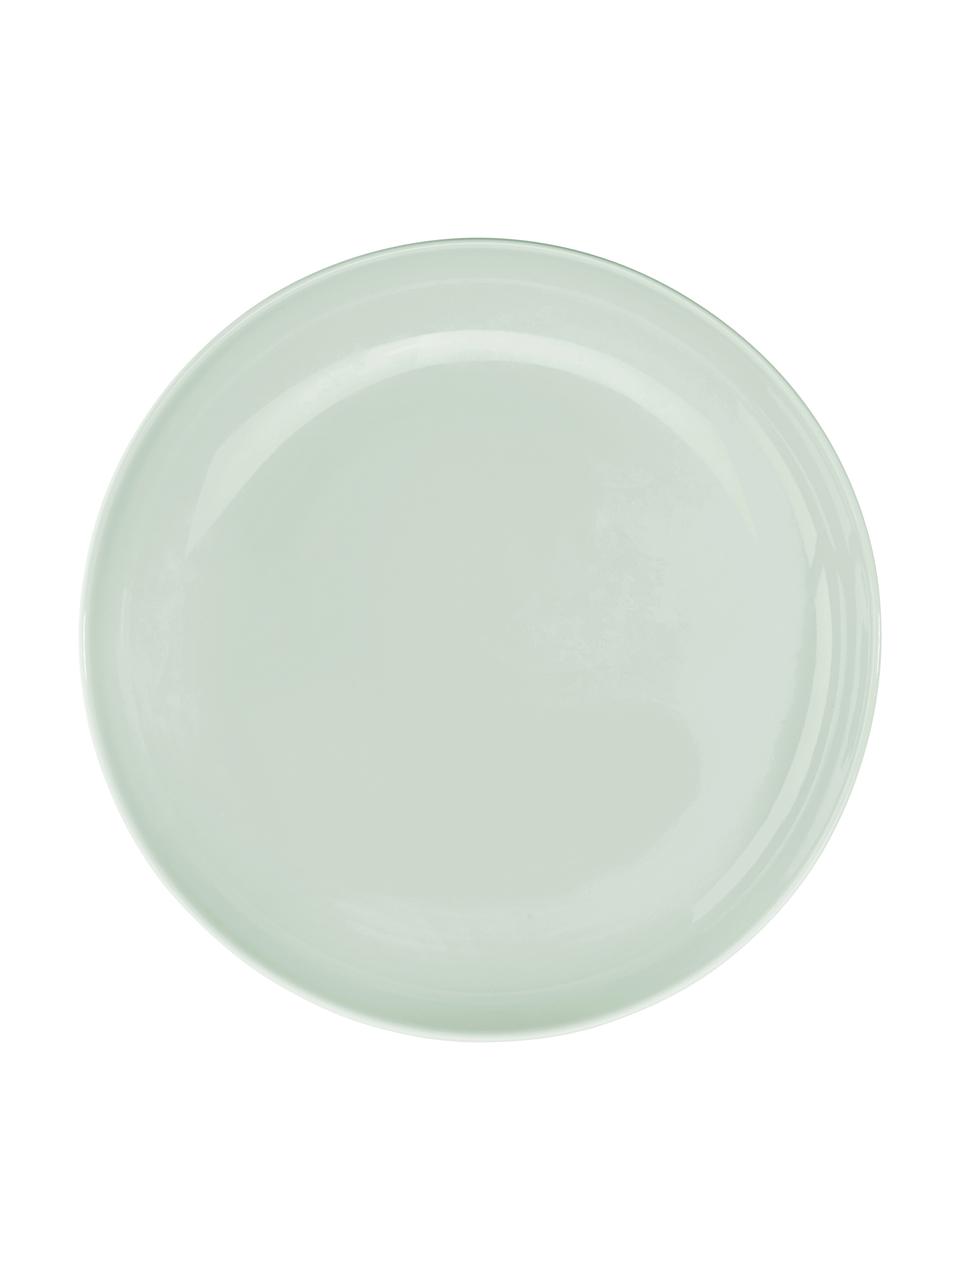 Porzellan-Frühstücksteller Kolibri in Mintgrün glänzend, 6 Stück, Porzellan, Mintgrün, Ø 21 cm